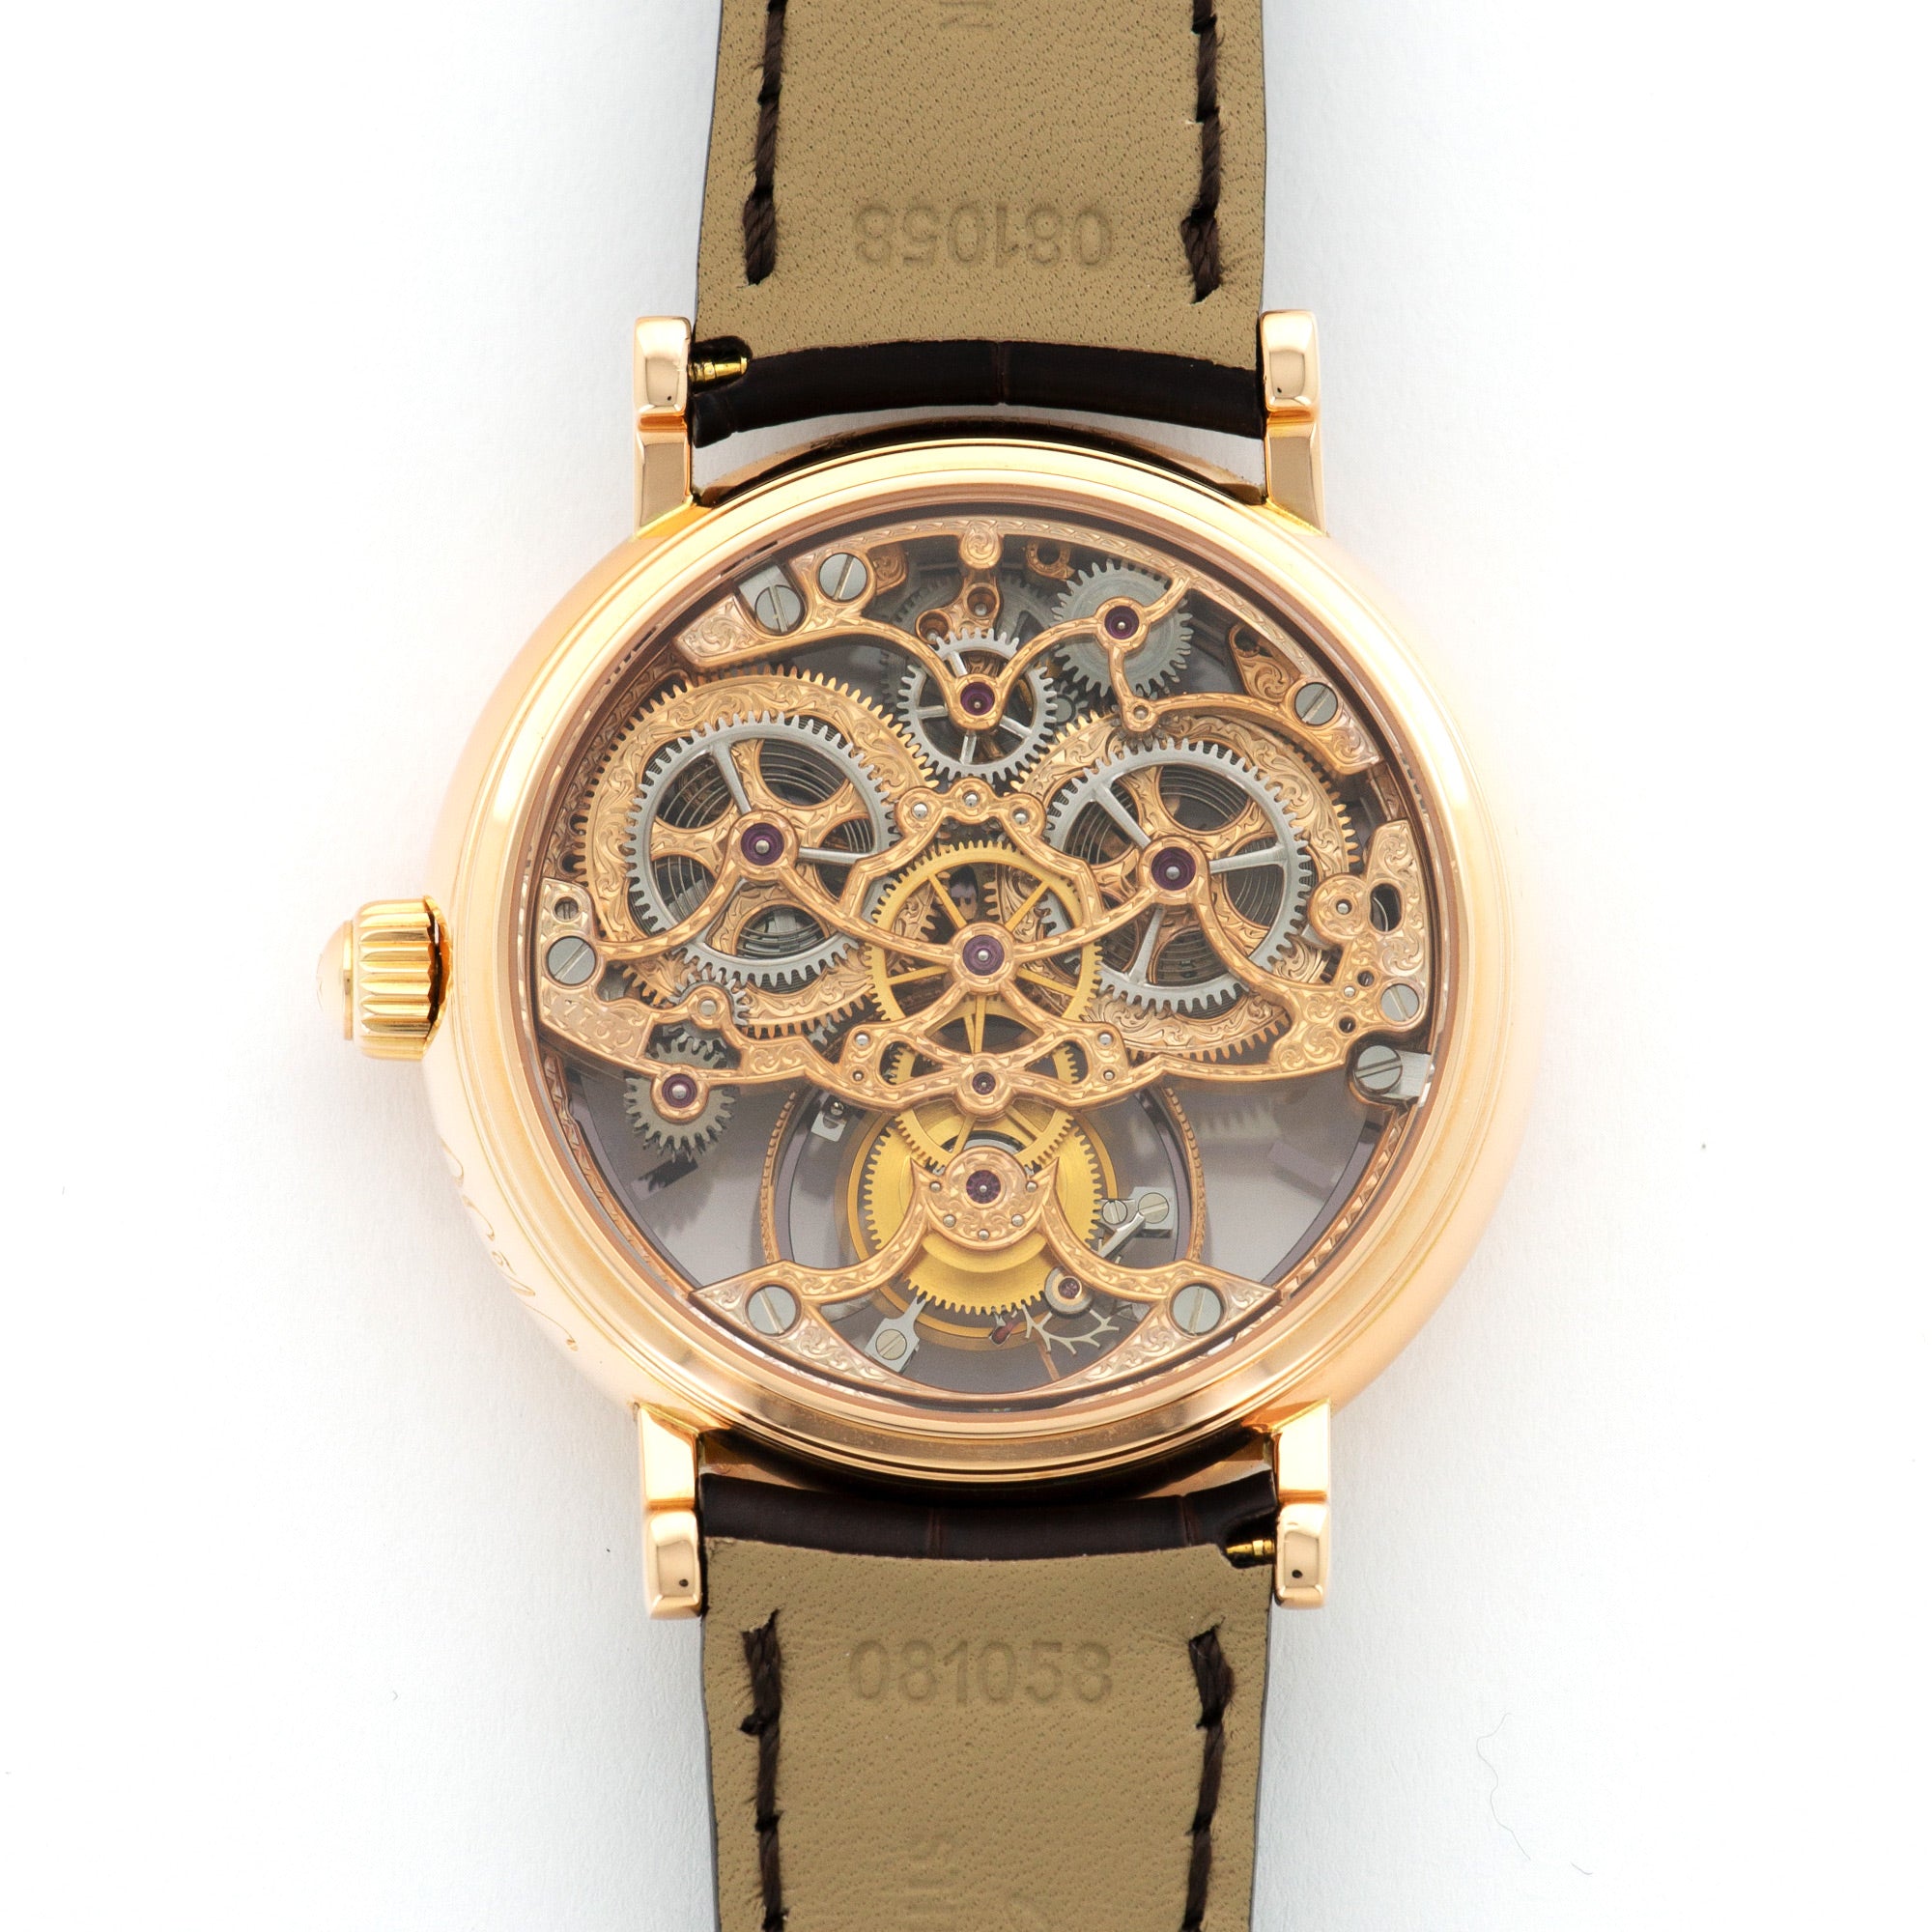 Vacheron Constantin - Vacheron Constantin Rose Gold Skeletonized Tourbillon Watch - The Keystone Watches